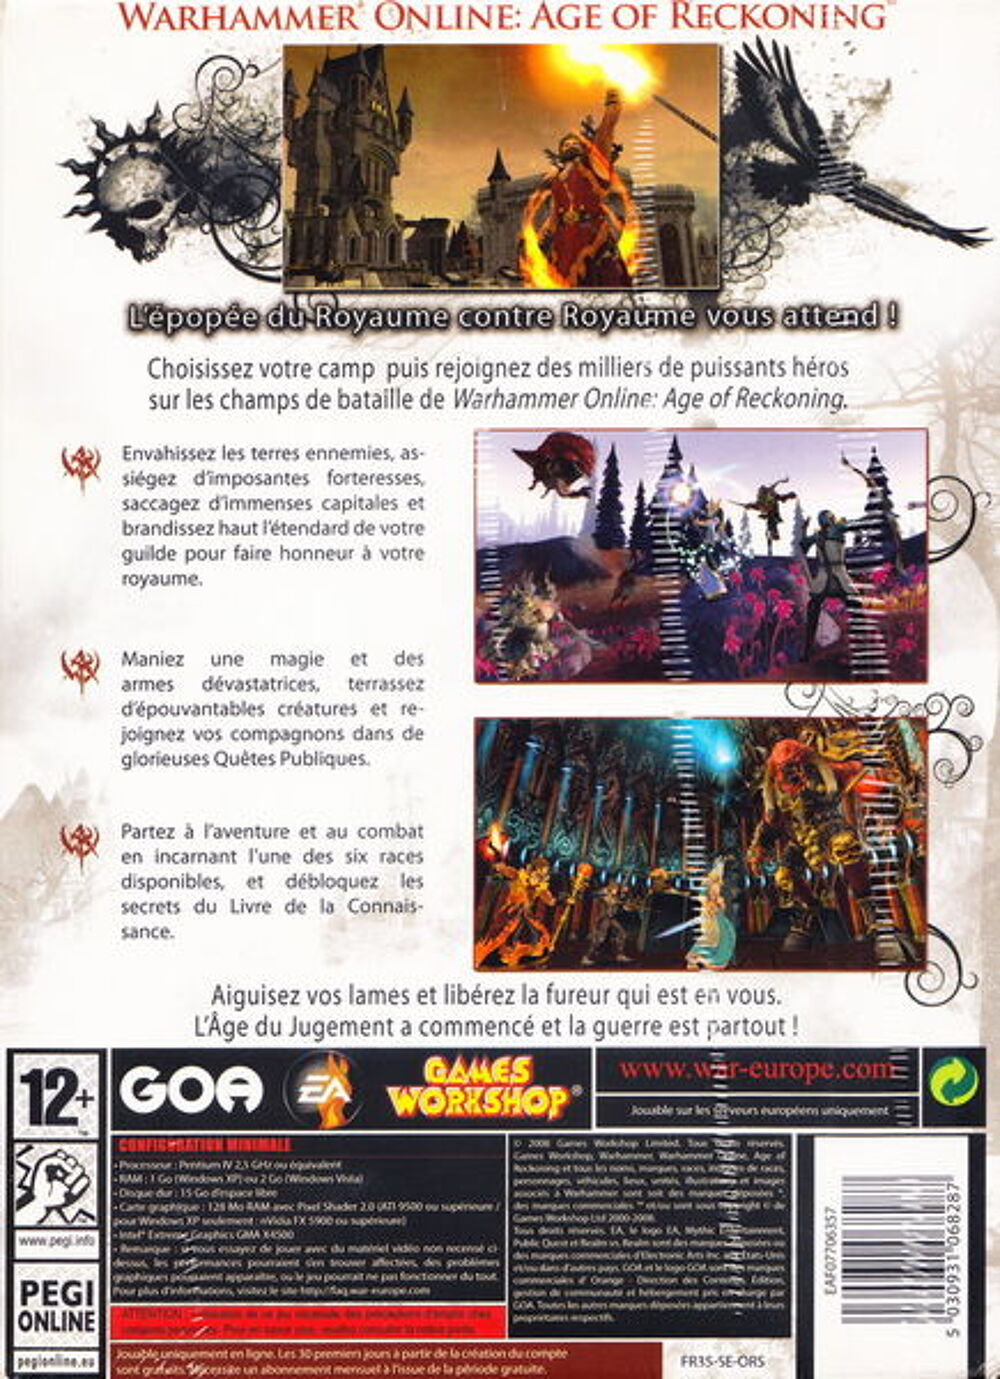 COFFRET DVD jeu PC Warhammer Online: Age of Reckoning NEUF
Consoles et jeux vidos